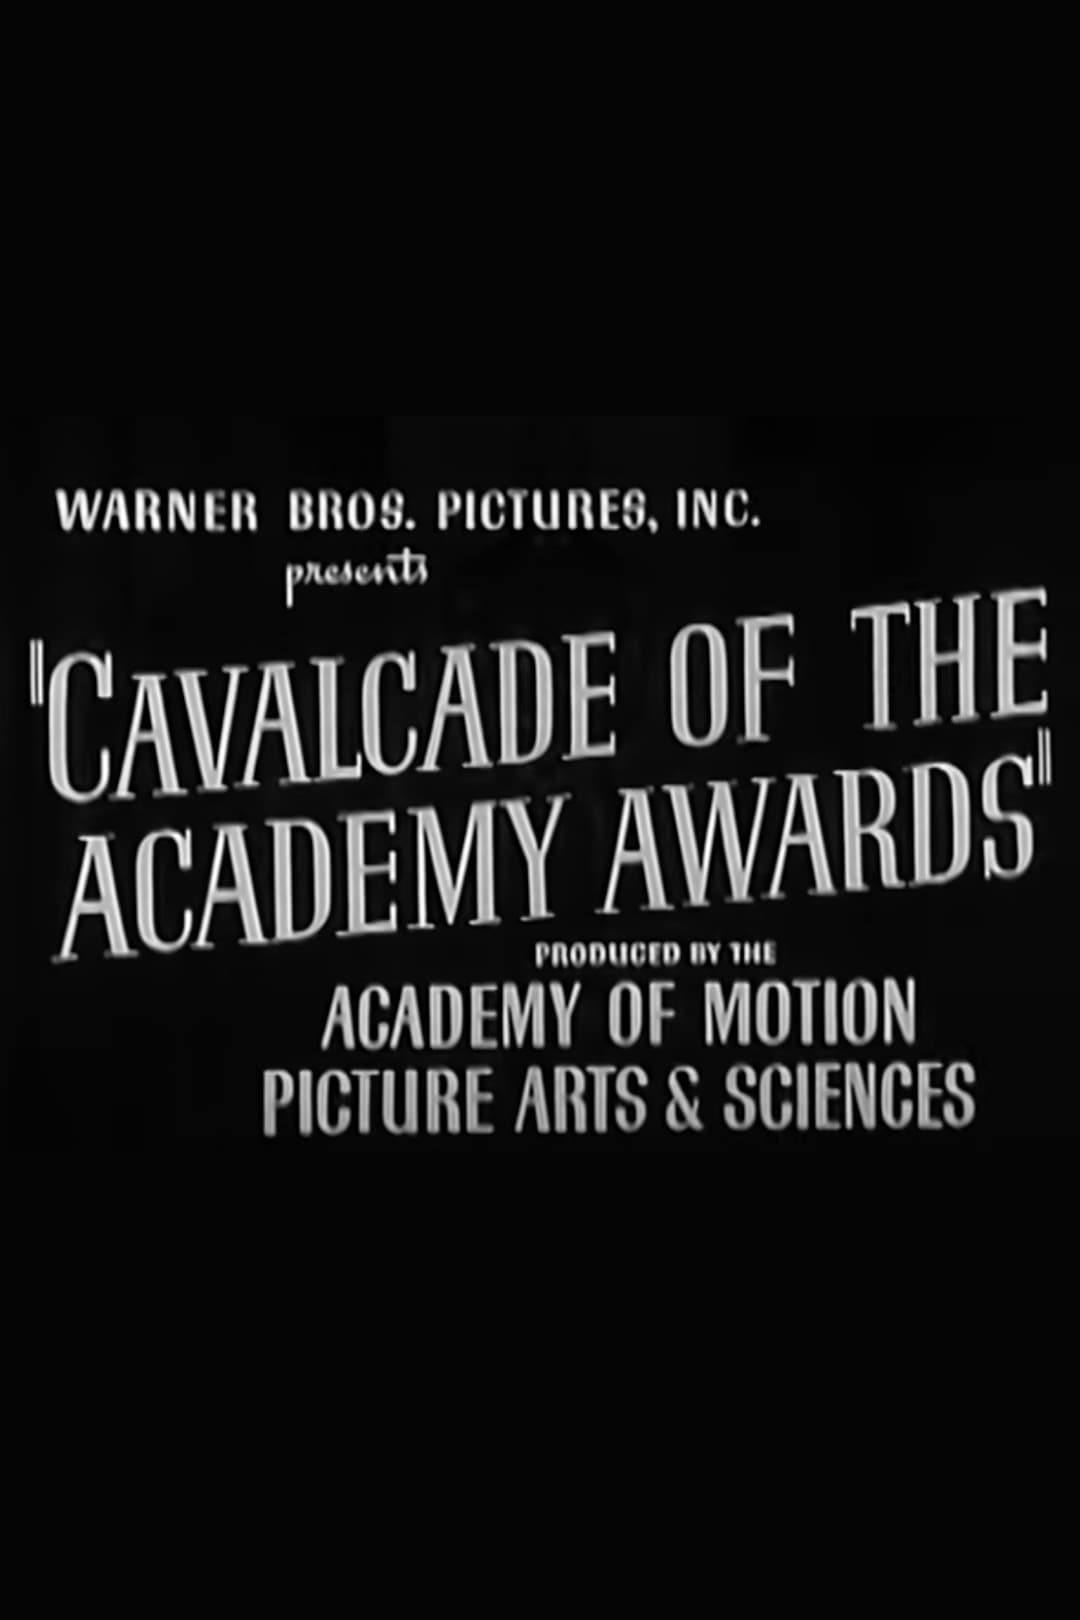 Cavalcade of the Academy Awards (1940)